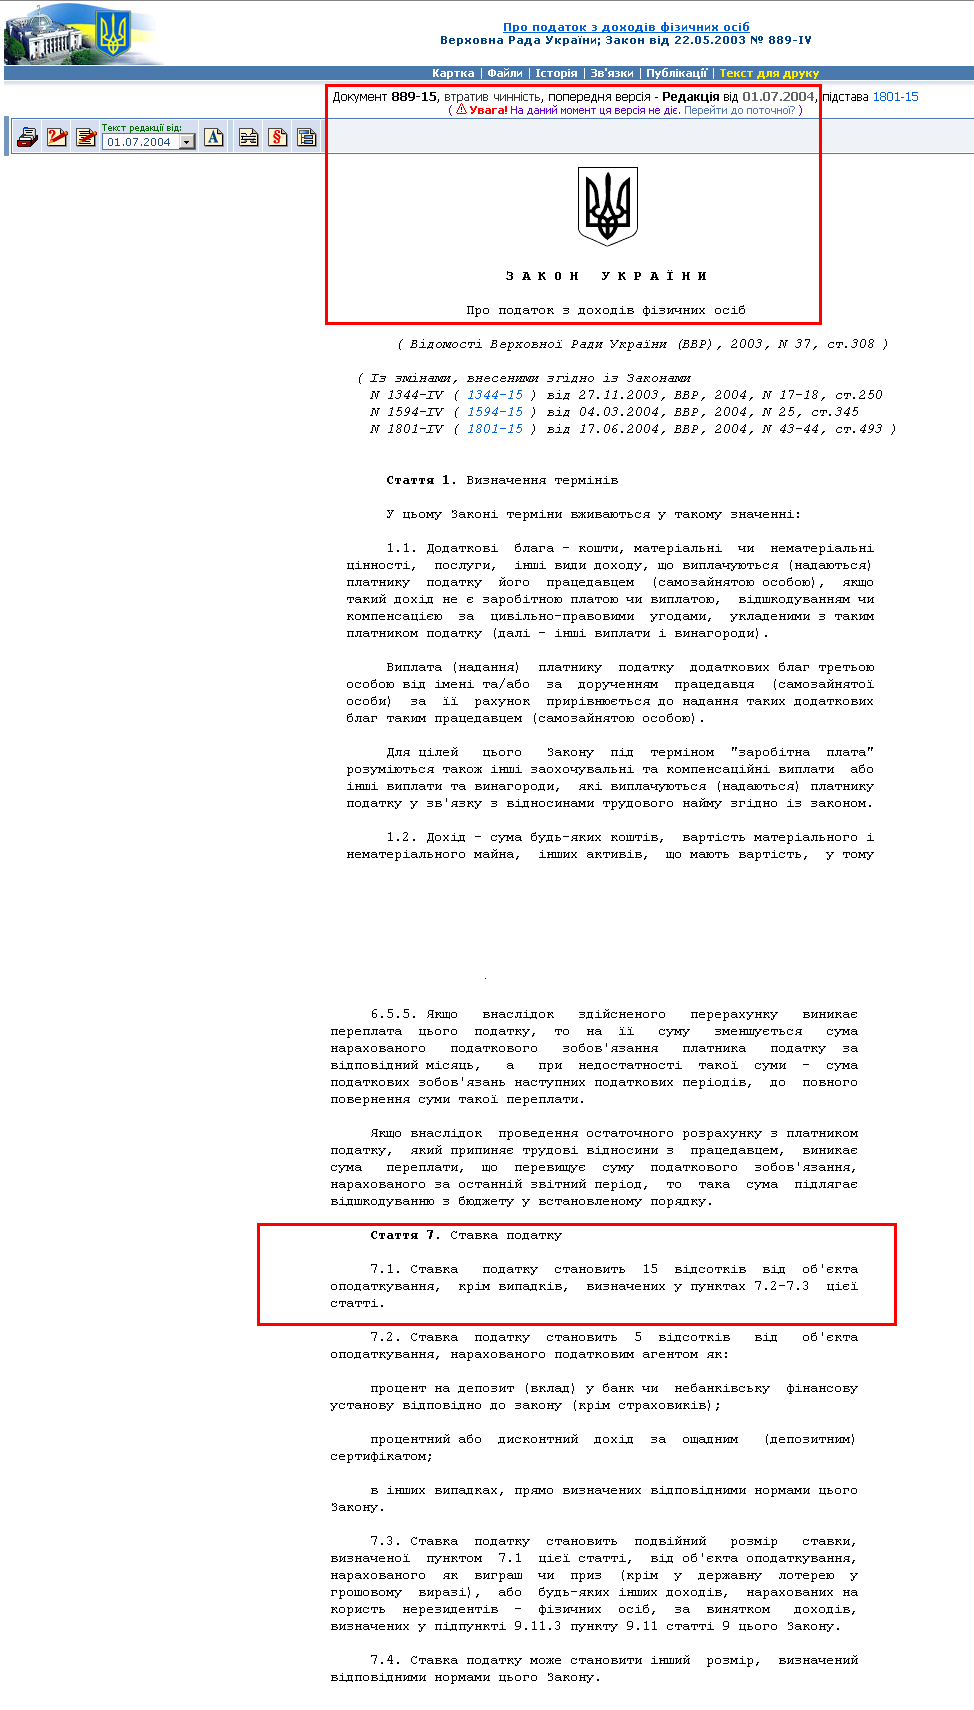 http://zakon2.rada.gov.ua/laws/show/889-15/ed20040701/page2